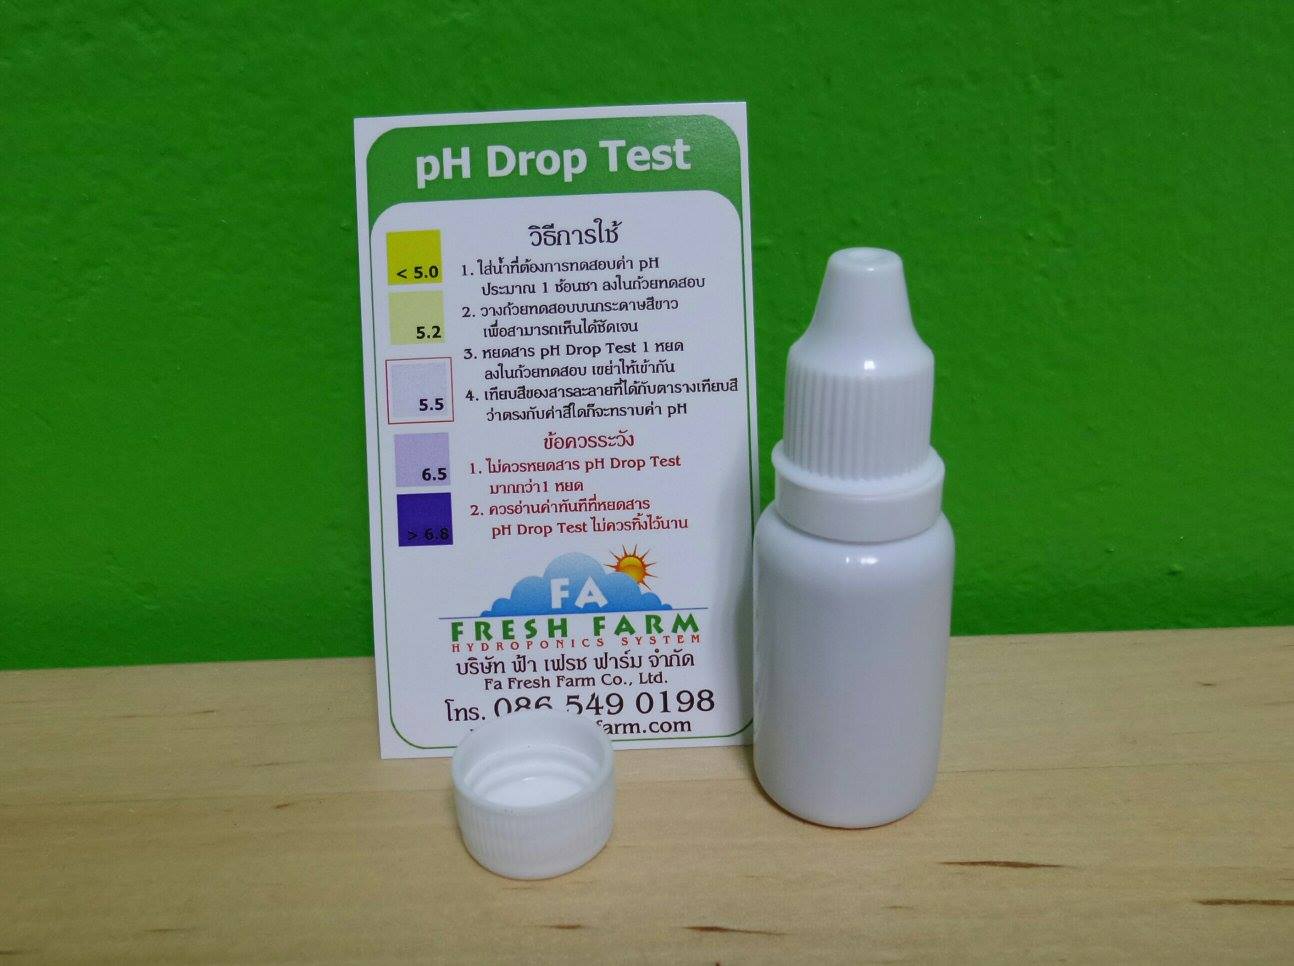 pH drop test